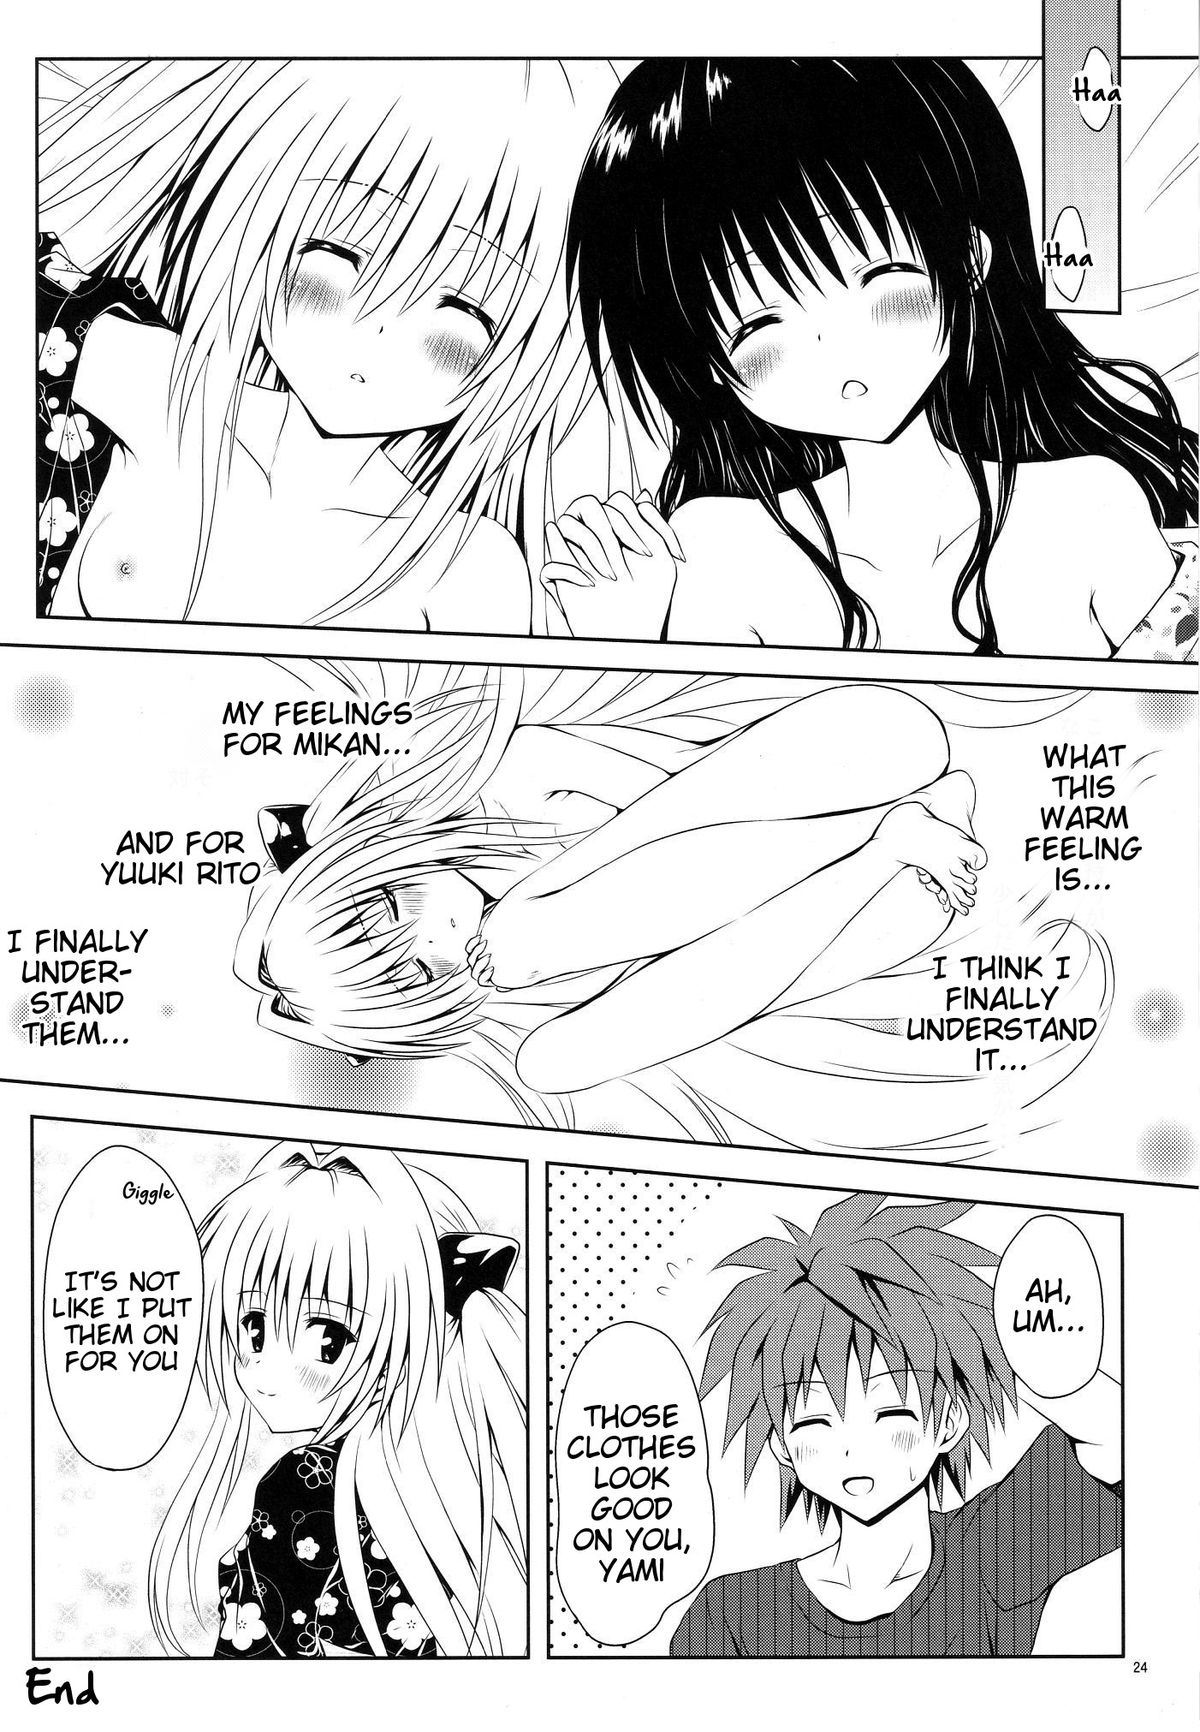 Read Mikan To Osoroi Ga Iidesu To Love Ru Hentai Online Porn Manga And Doujinshi